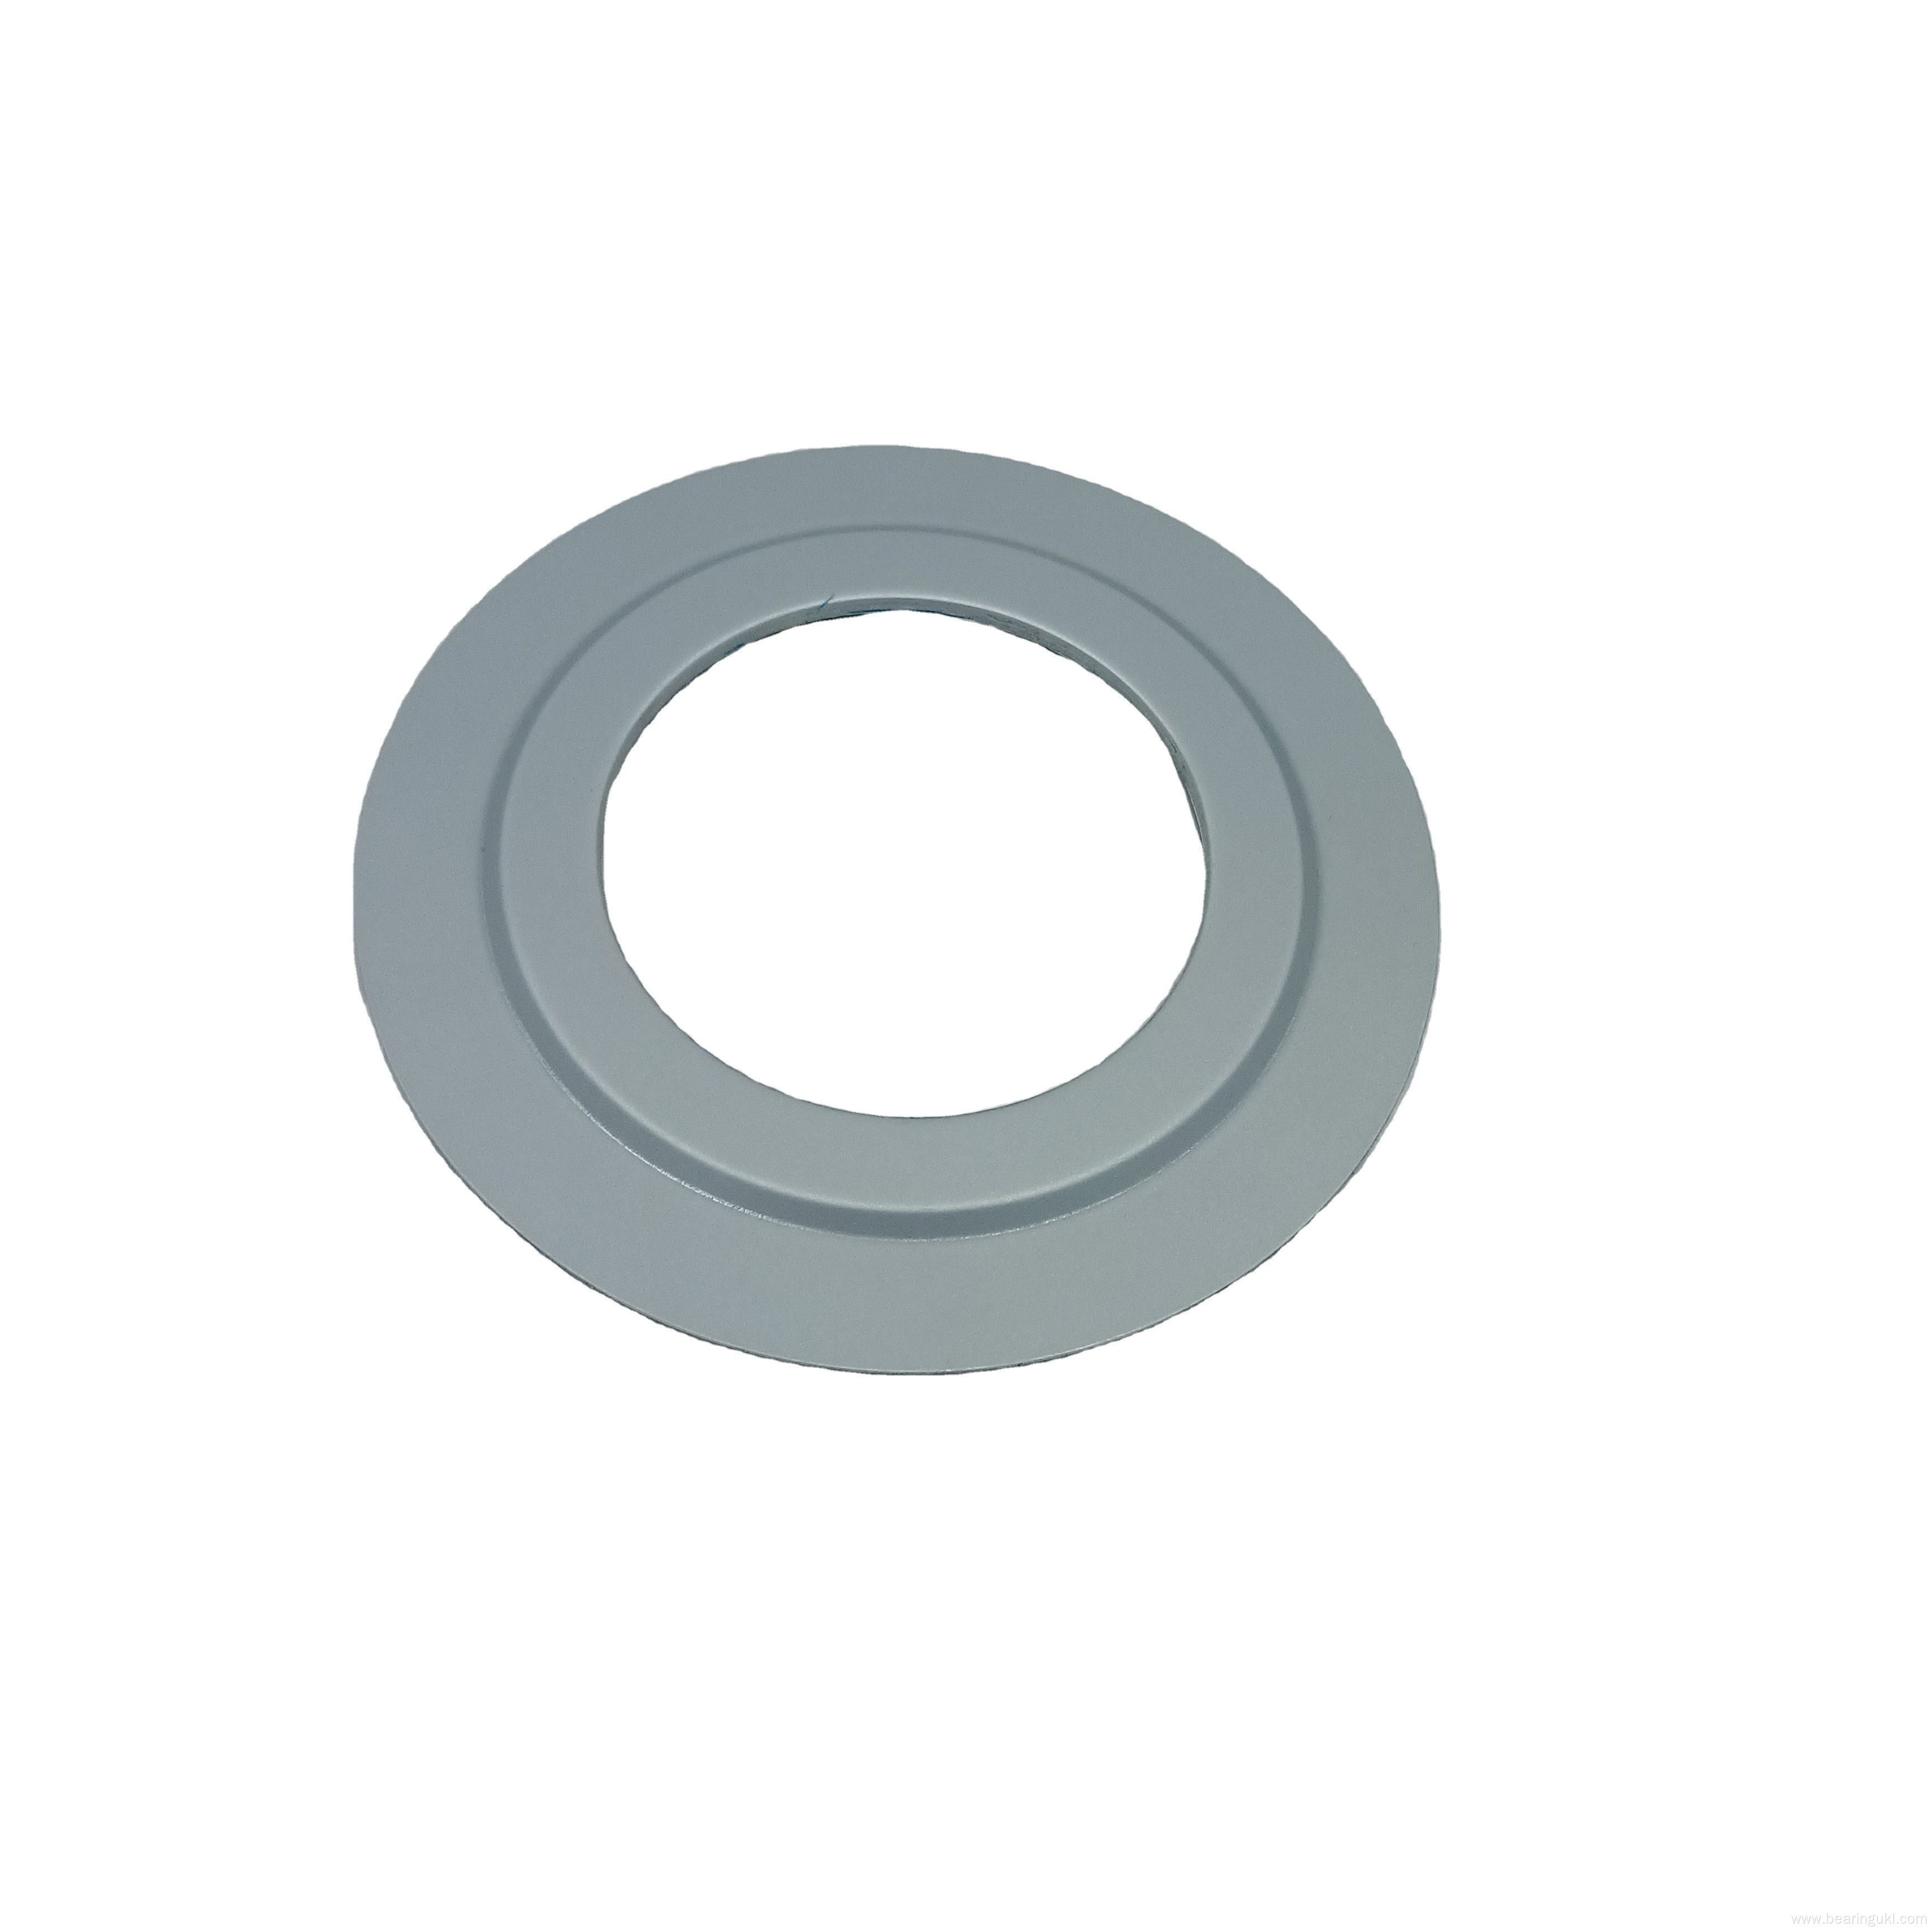 NILOS-Spacer-Ring A75 A80 A85 metal seal